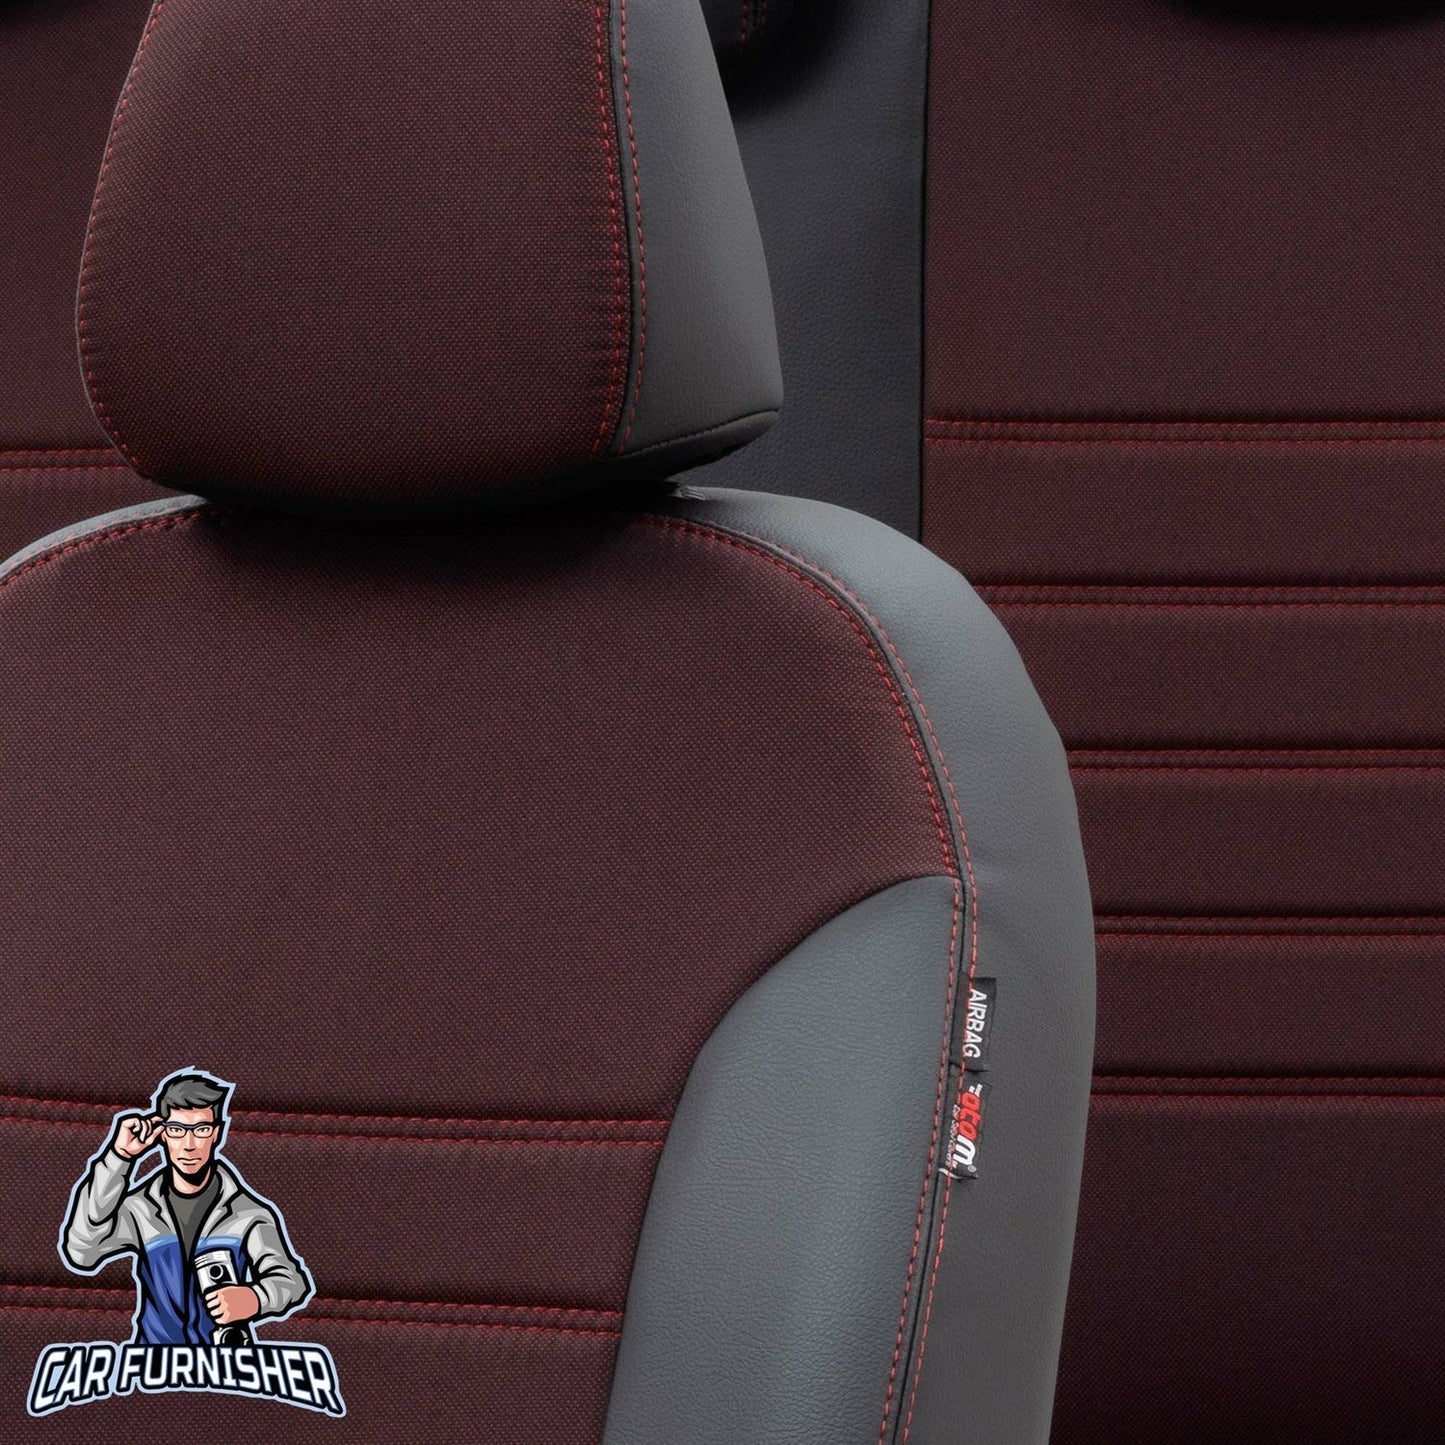 Hyundai Elantra Seat Covers Paris Leather & Jacquard Design Red Leather & Jacquard Fabric